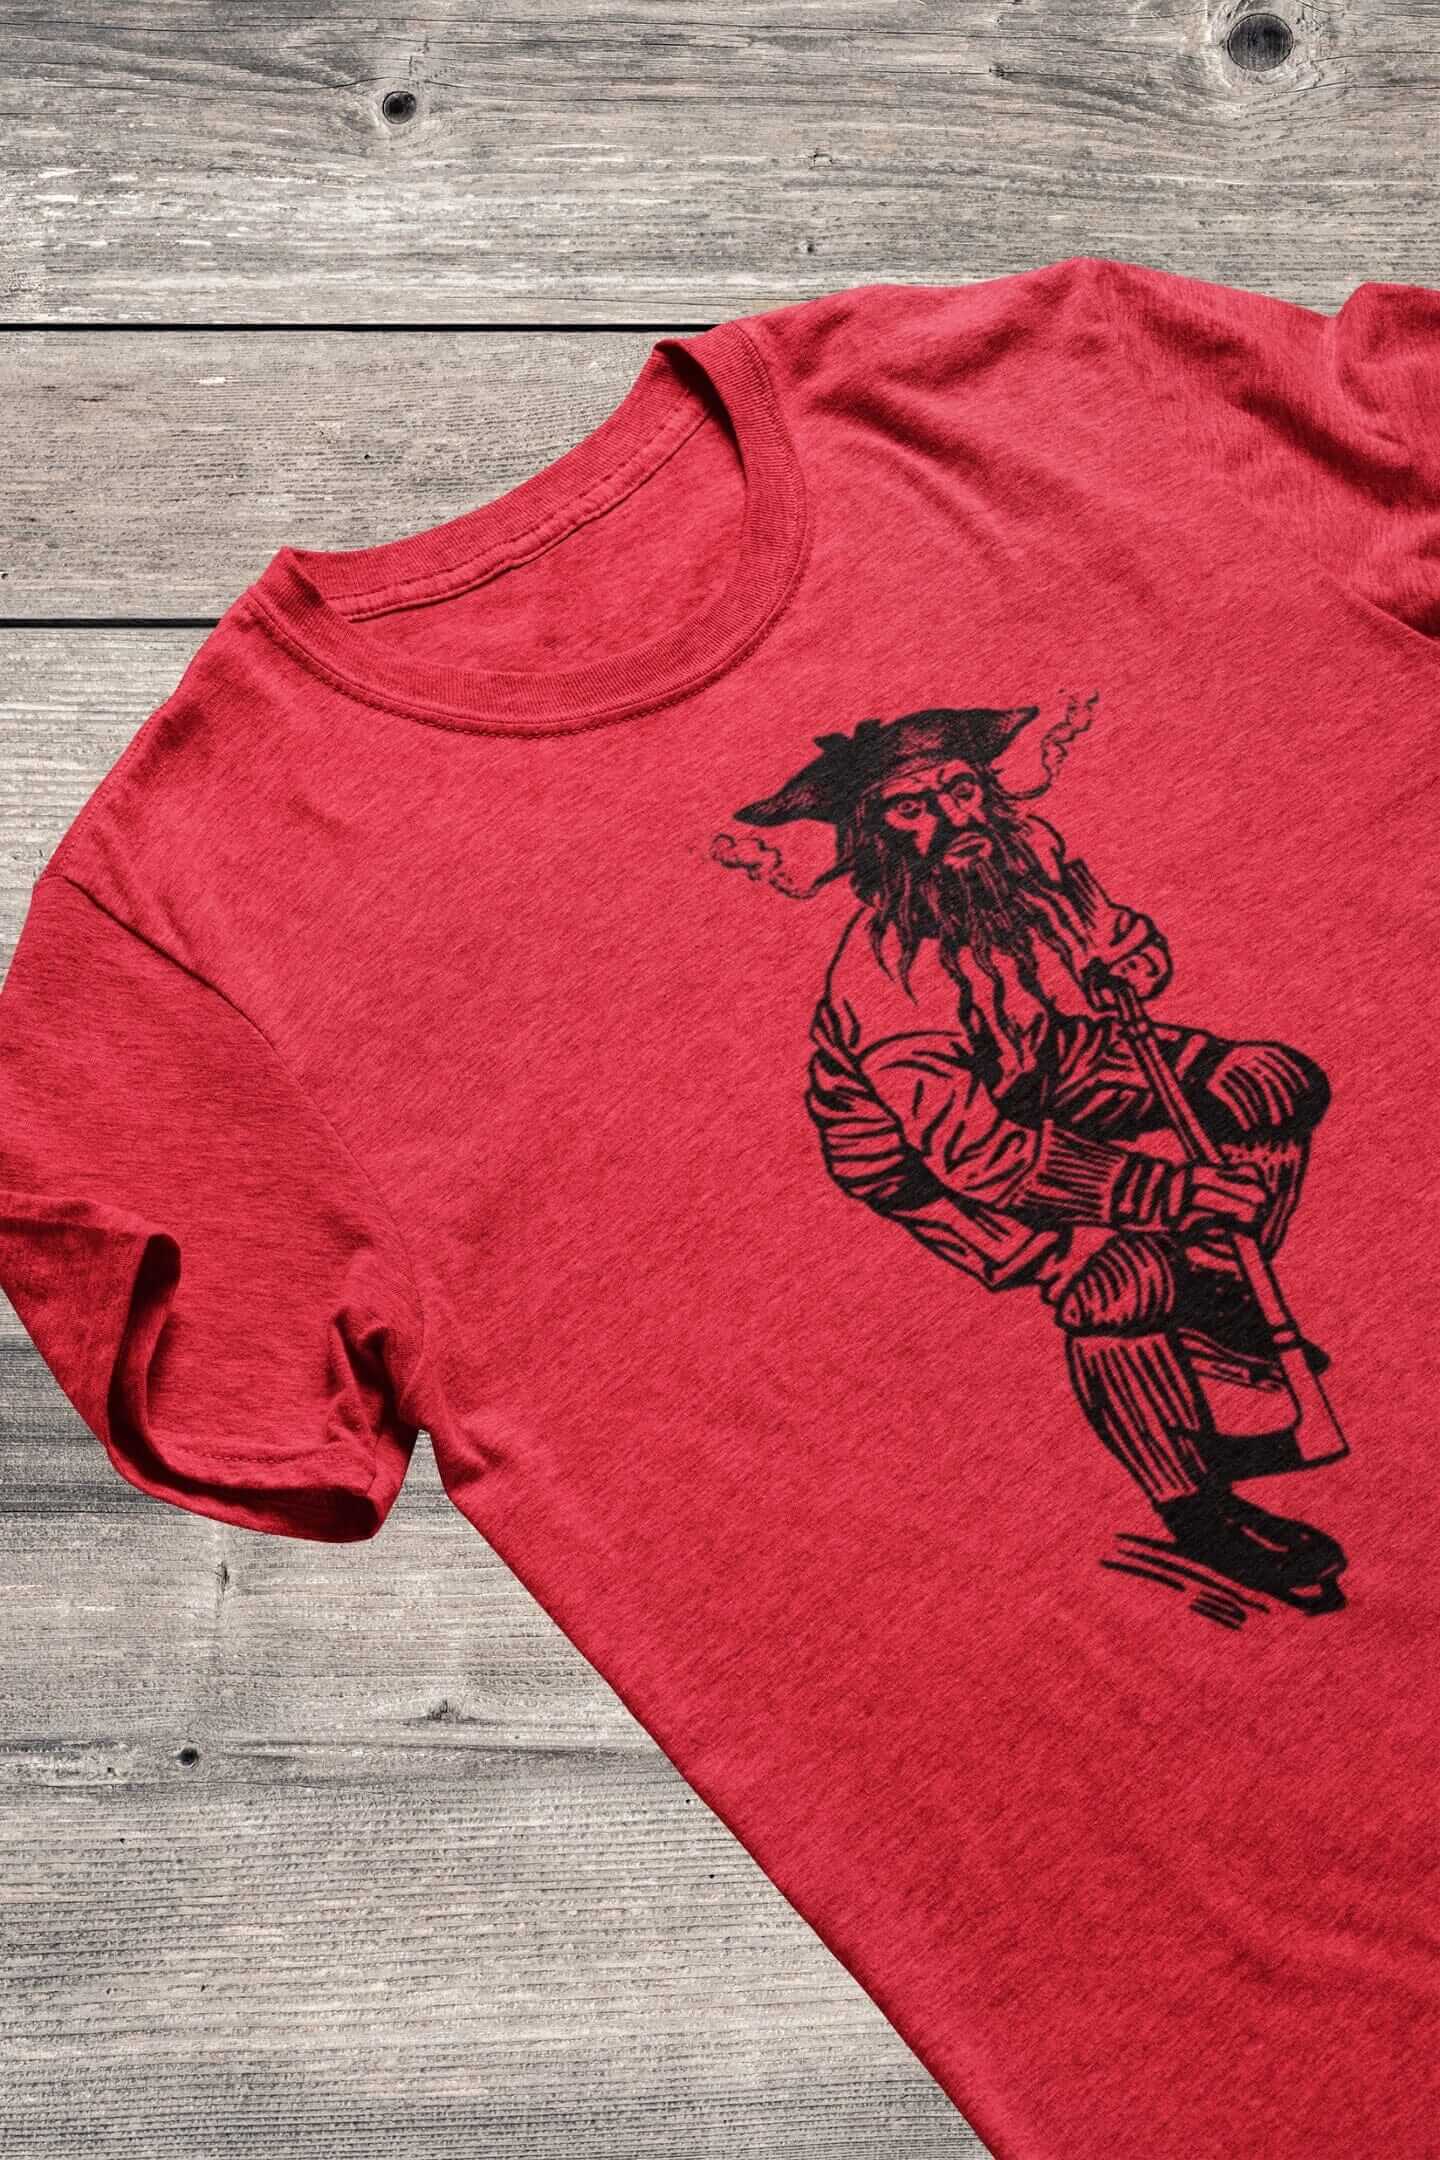 Blackbeard Hockey Shirt and Hoodie - House of Swank